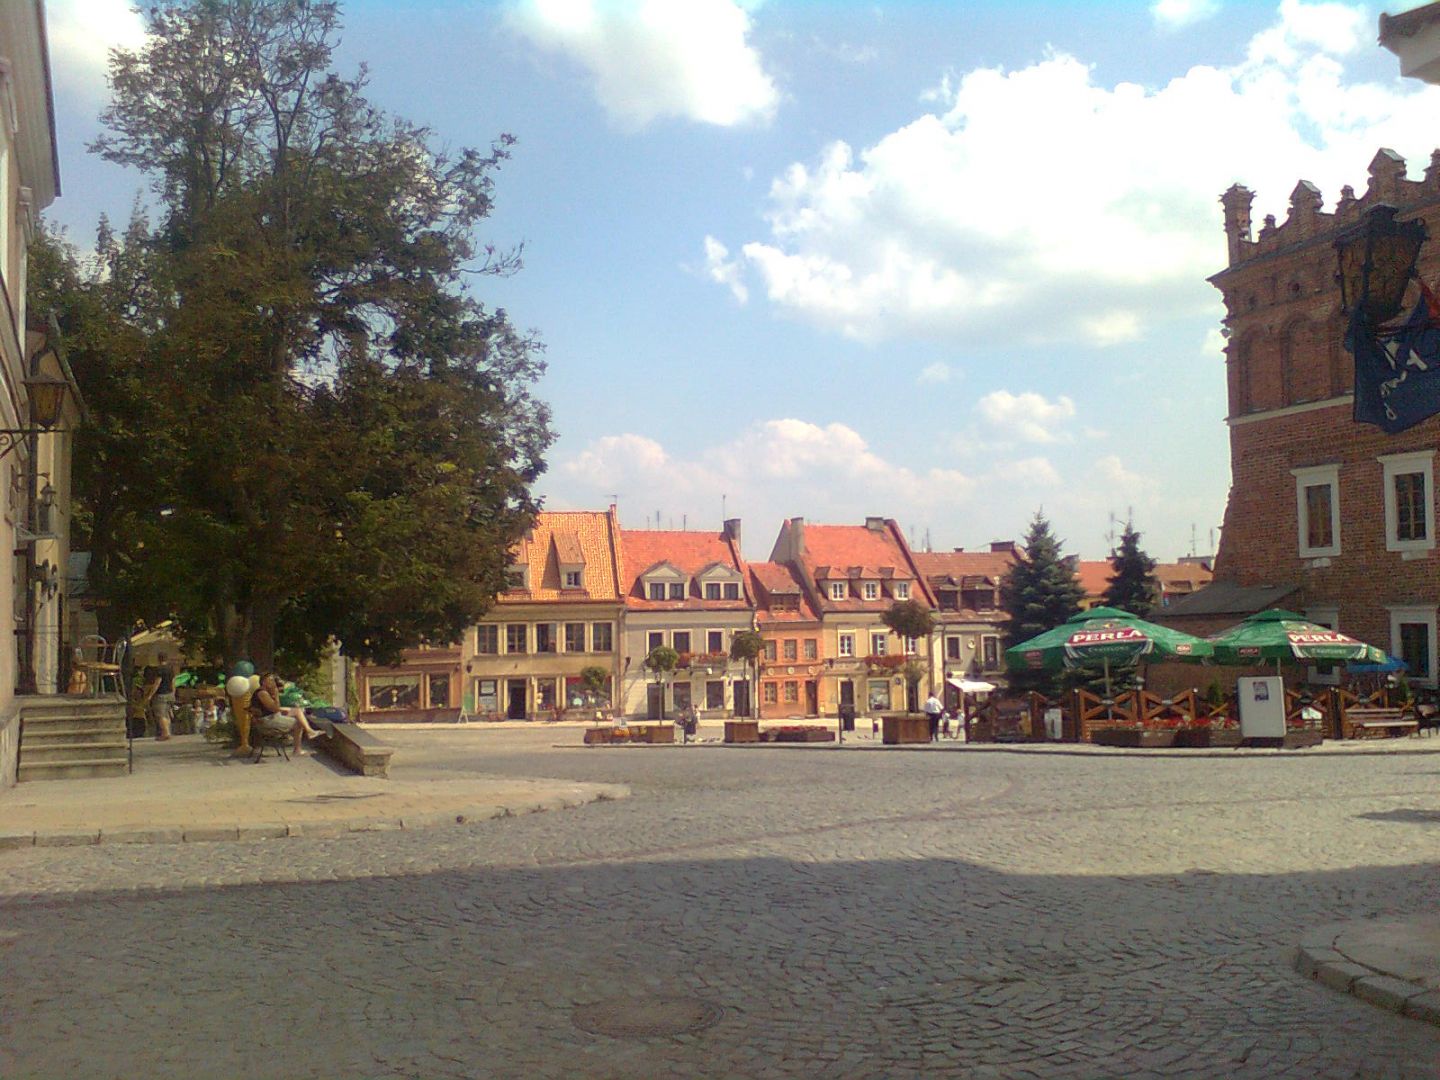 Rynek Starego Miasta